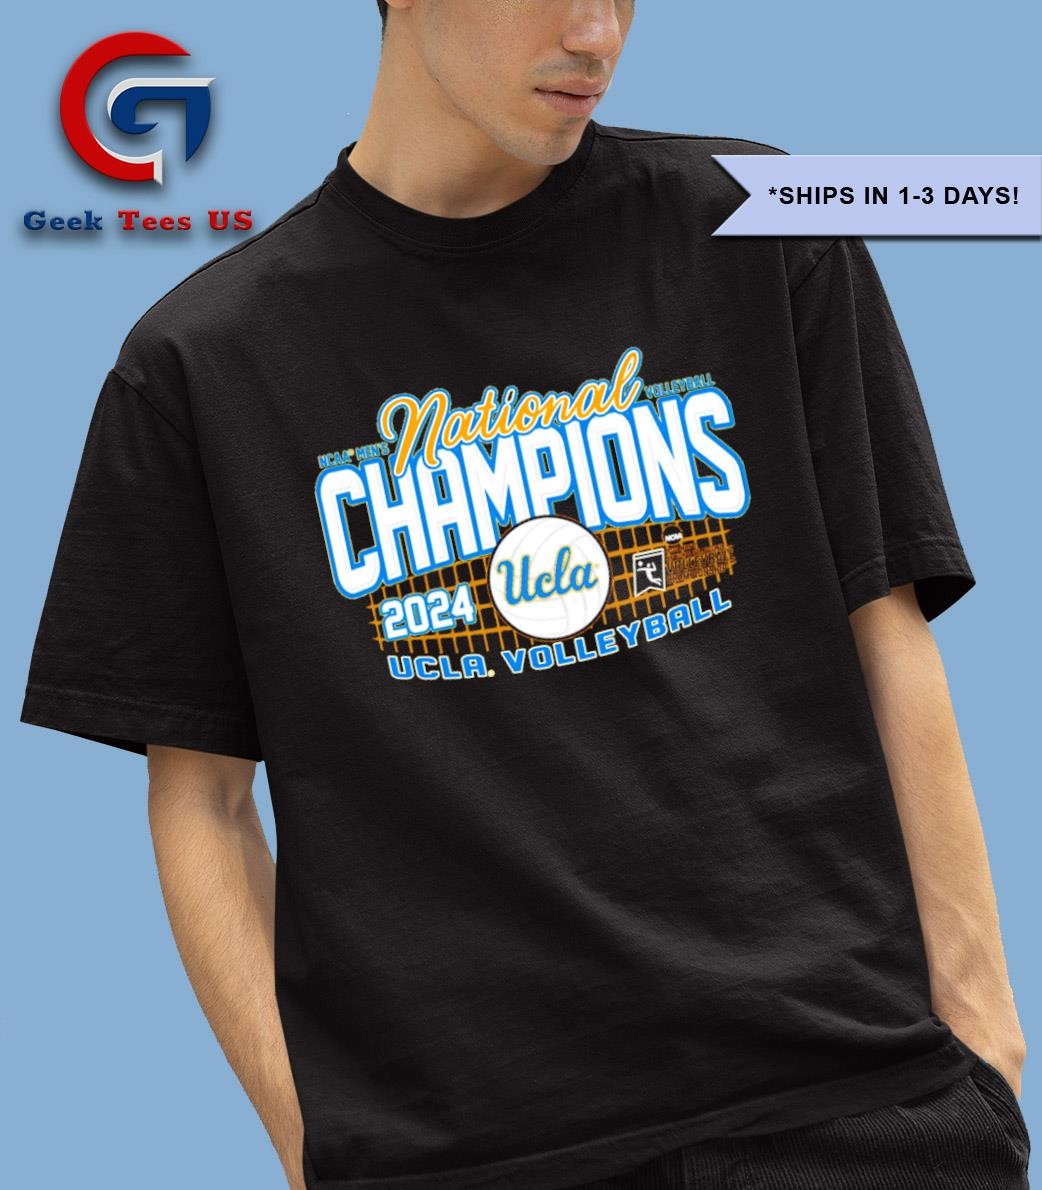 UCLA Bruins NCAA Men’s Volleyball National Champions 2024 logo shirt
#shirt #trending #gift #geekteesus #geekshirt #GEEKS #UCLA #UCLABruins #NCAA #volleyball #Champions